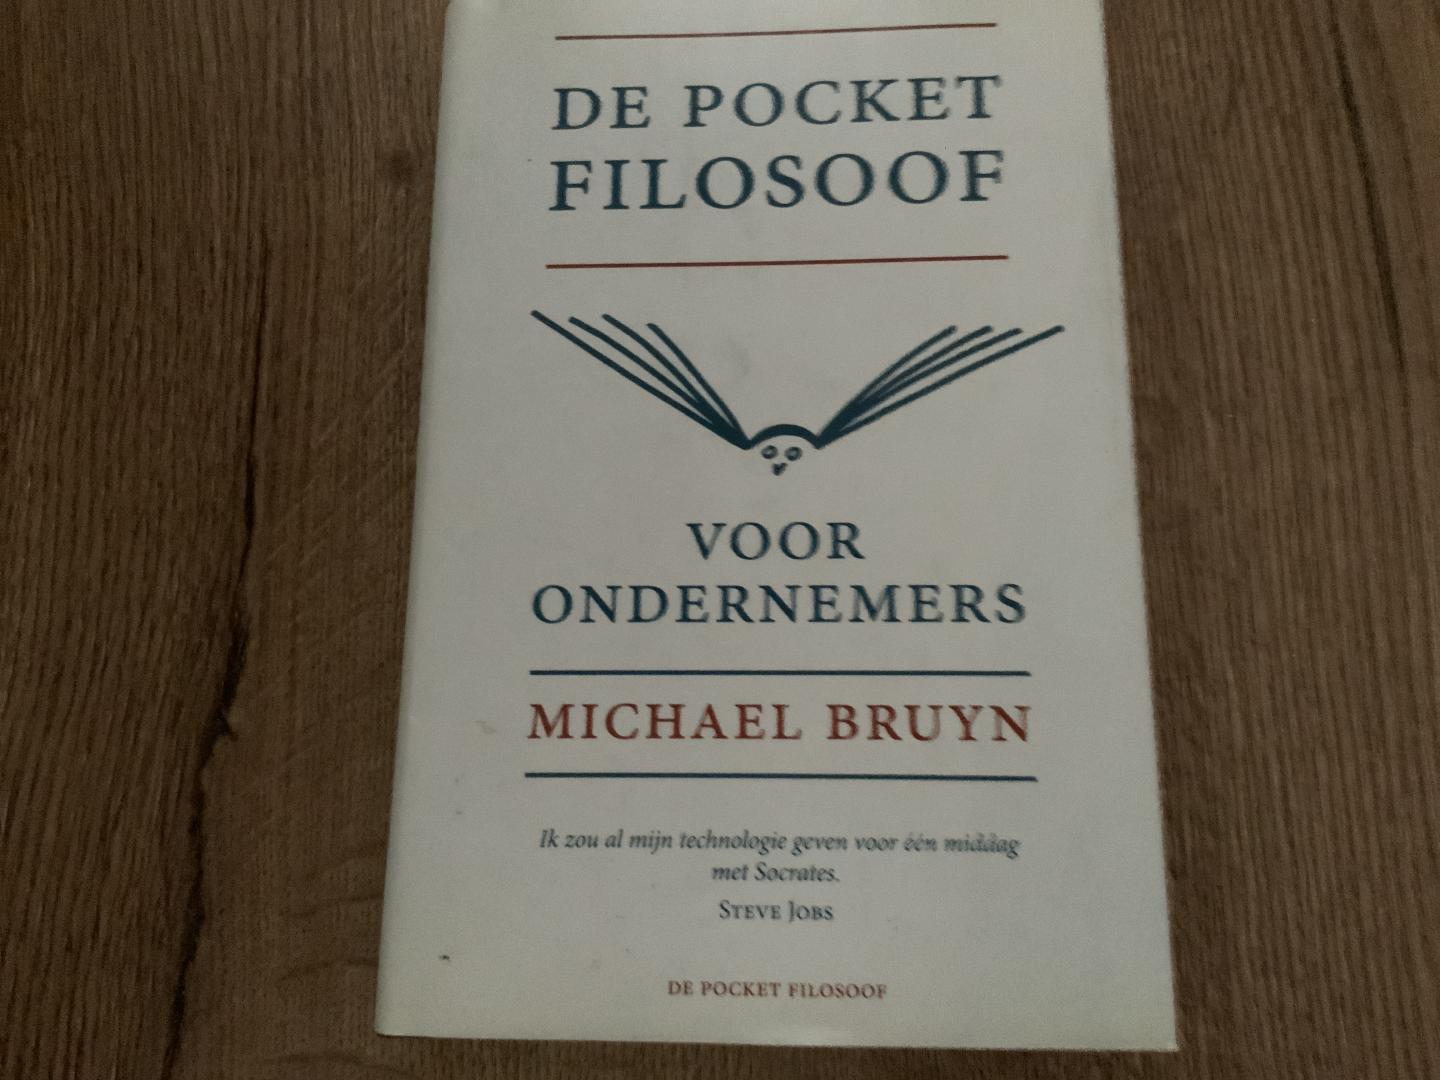 Bruyn, Michael F. - De pocket filosoof / voor ondernemers